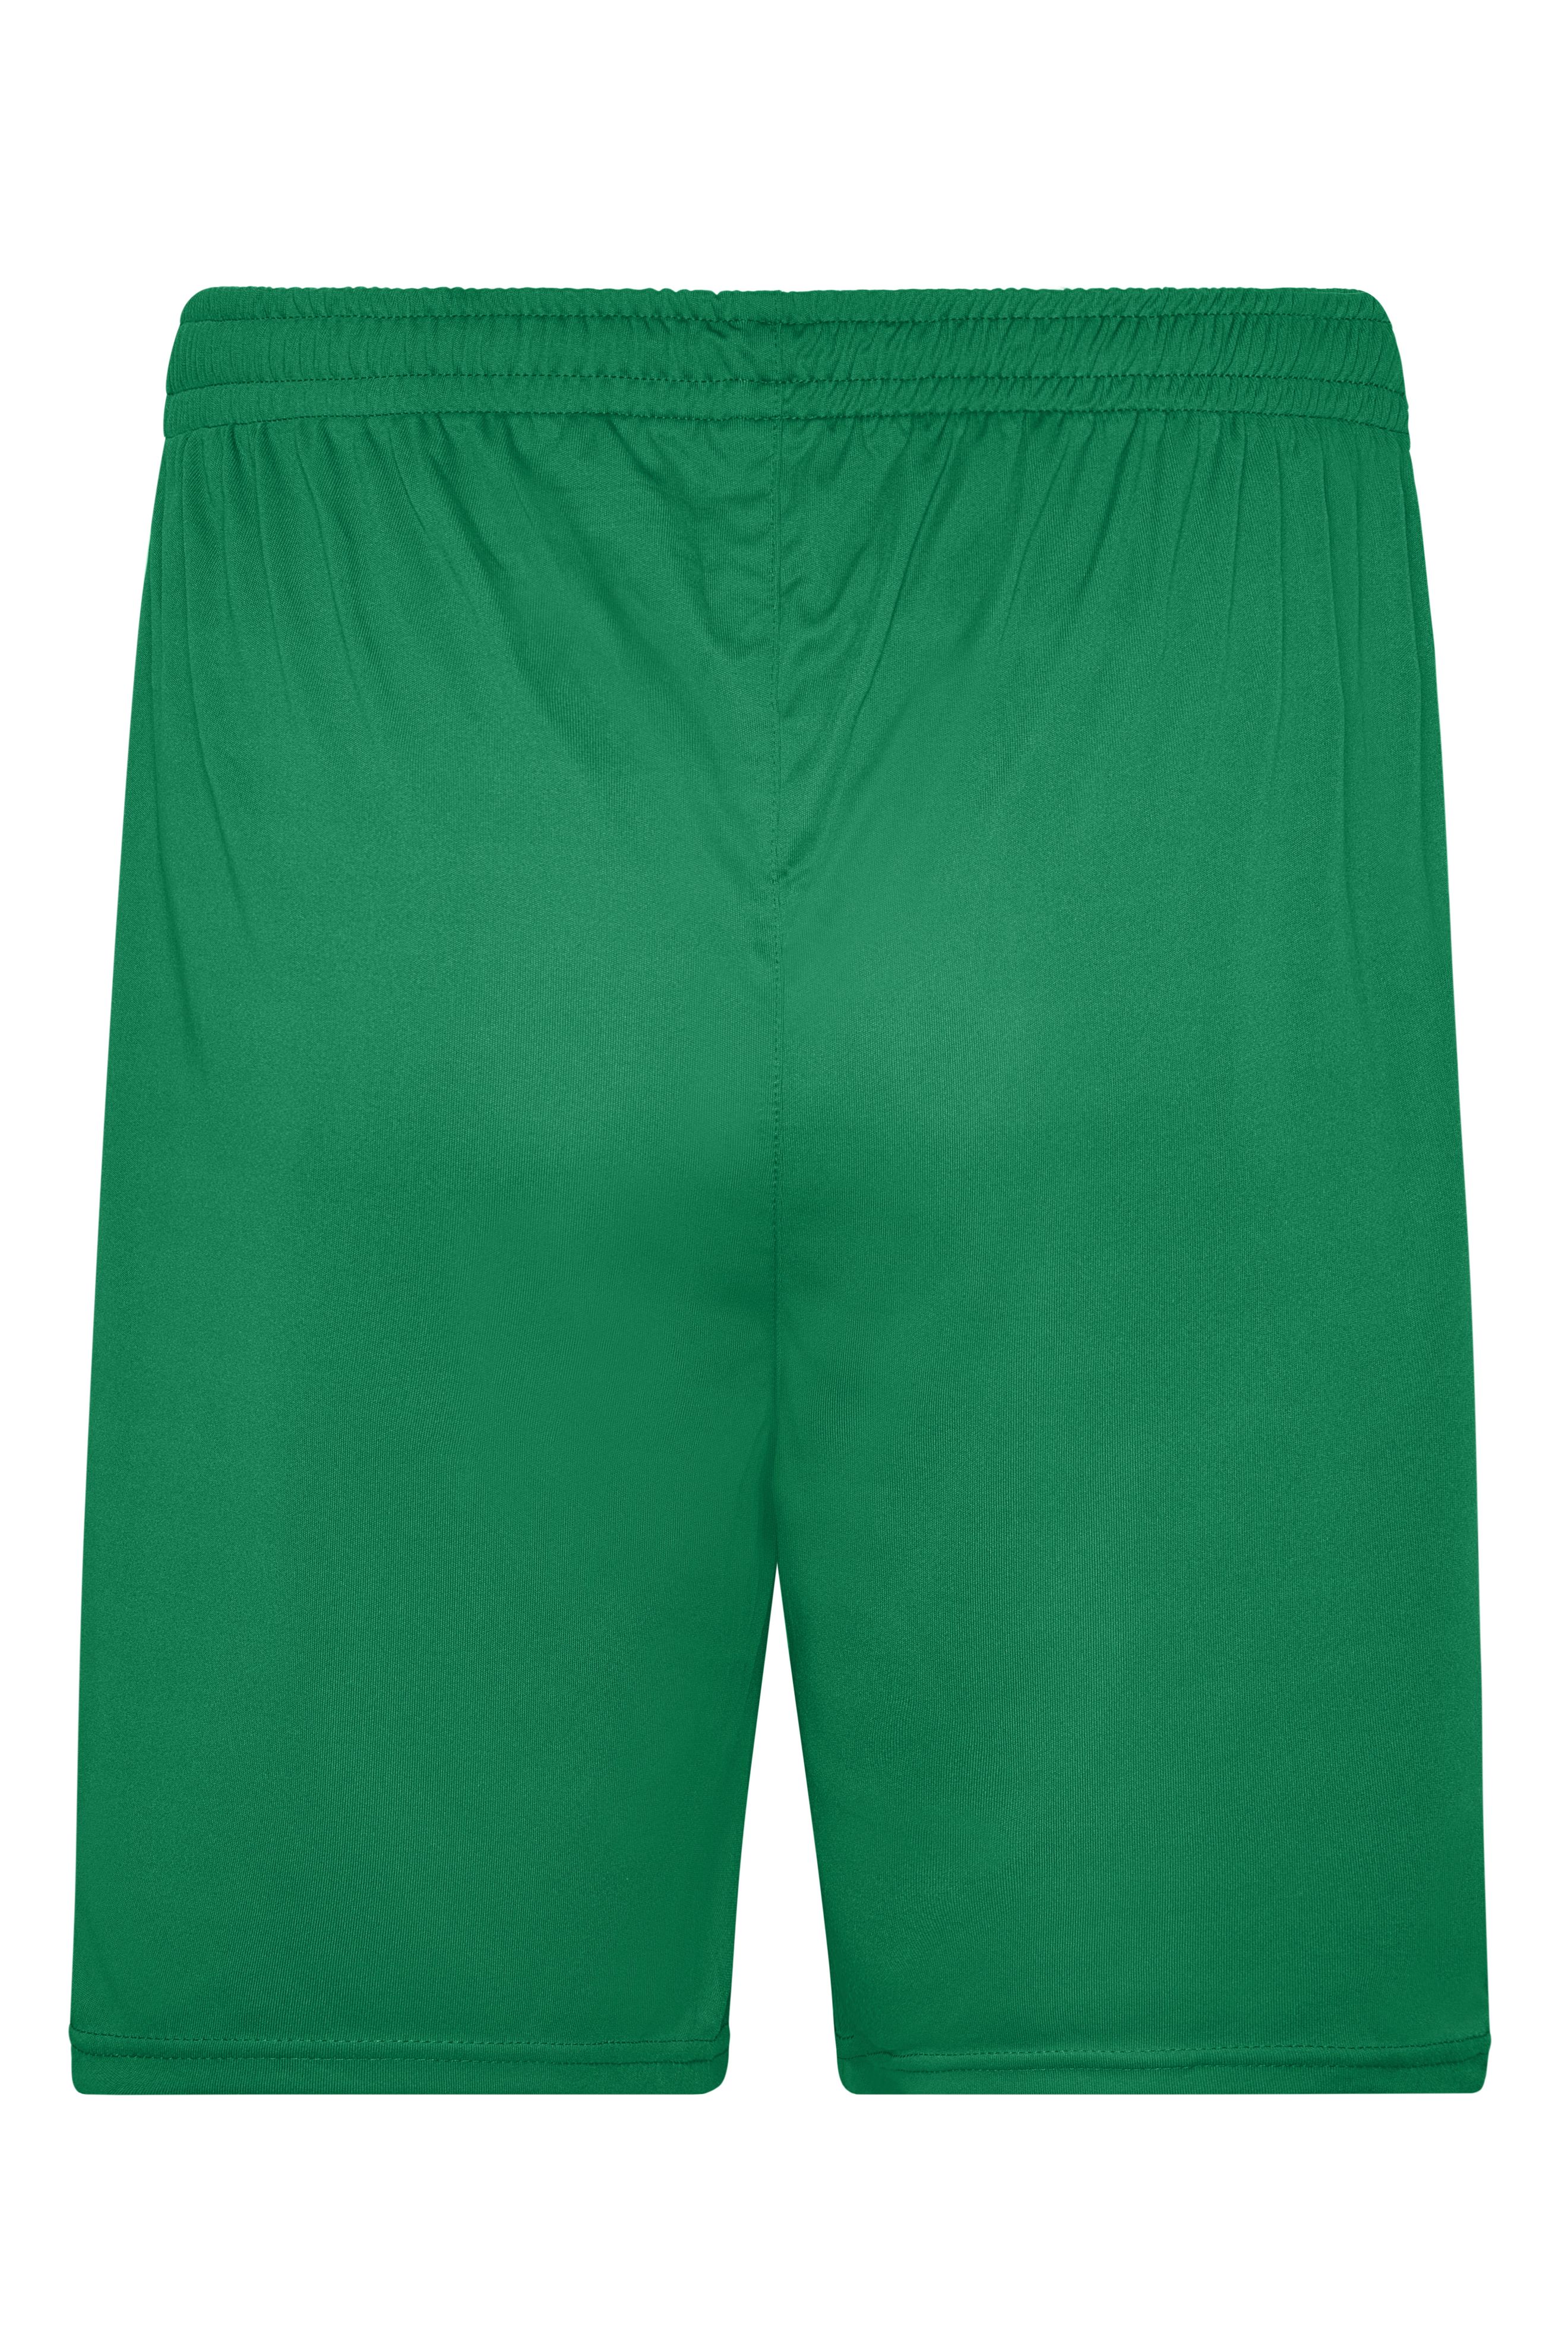 Unisex Competition Team Shorts Green/white-Daiber